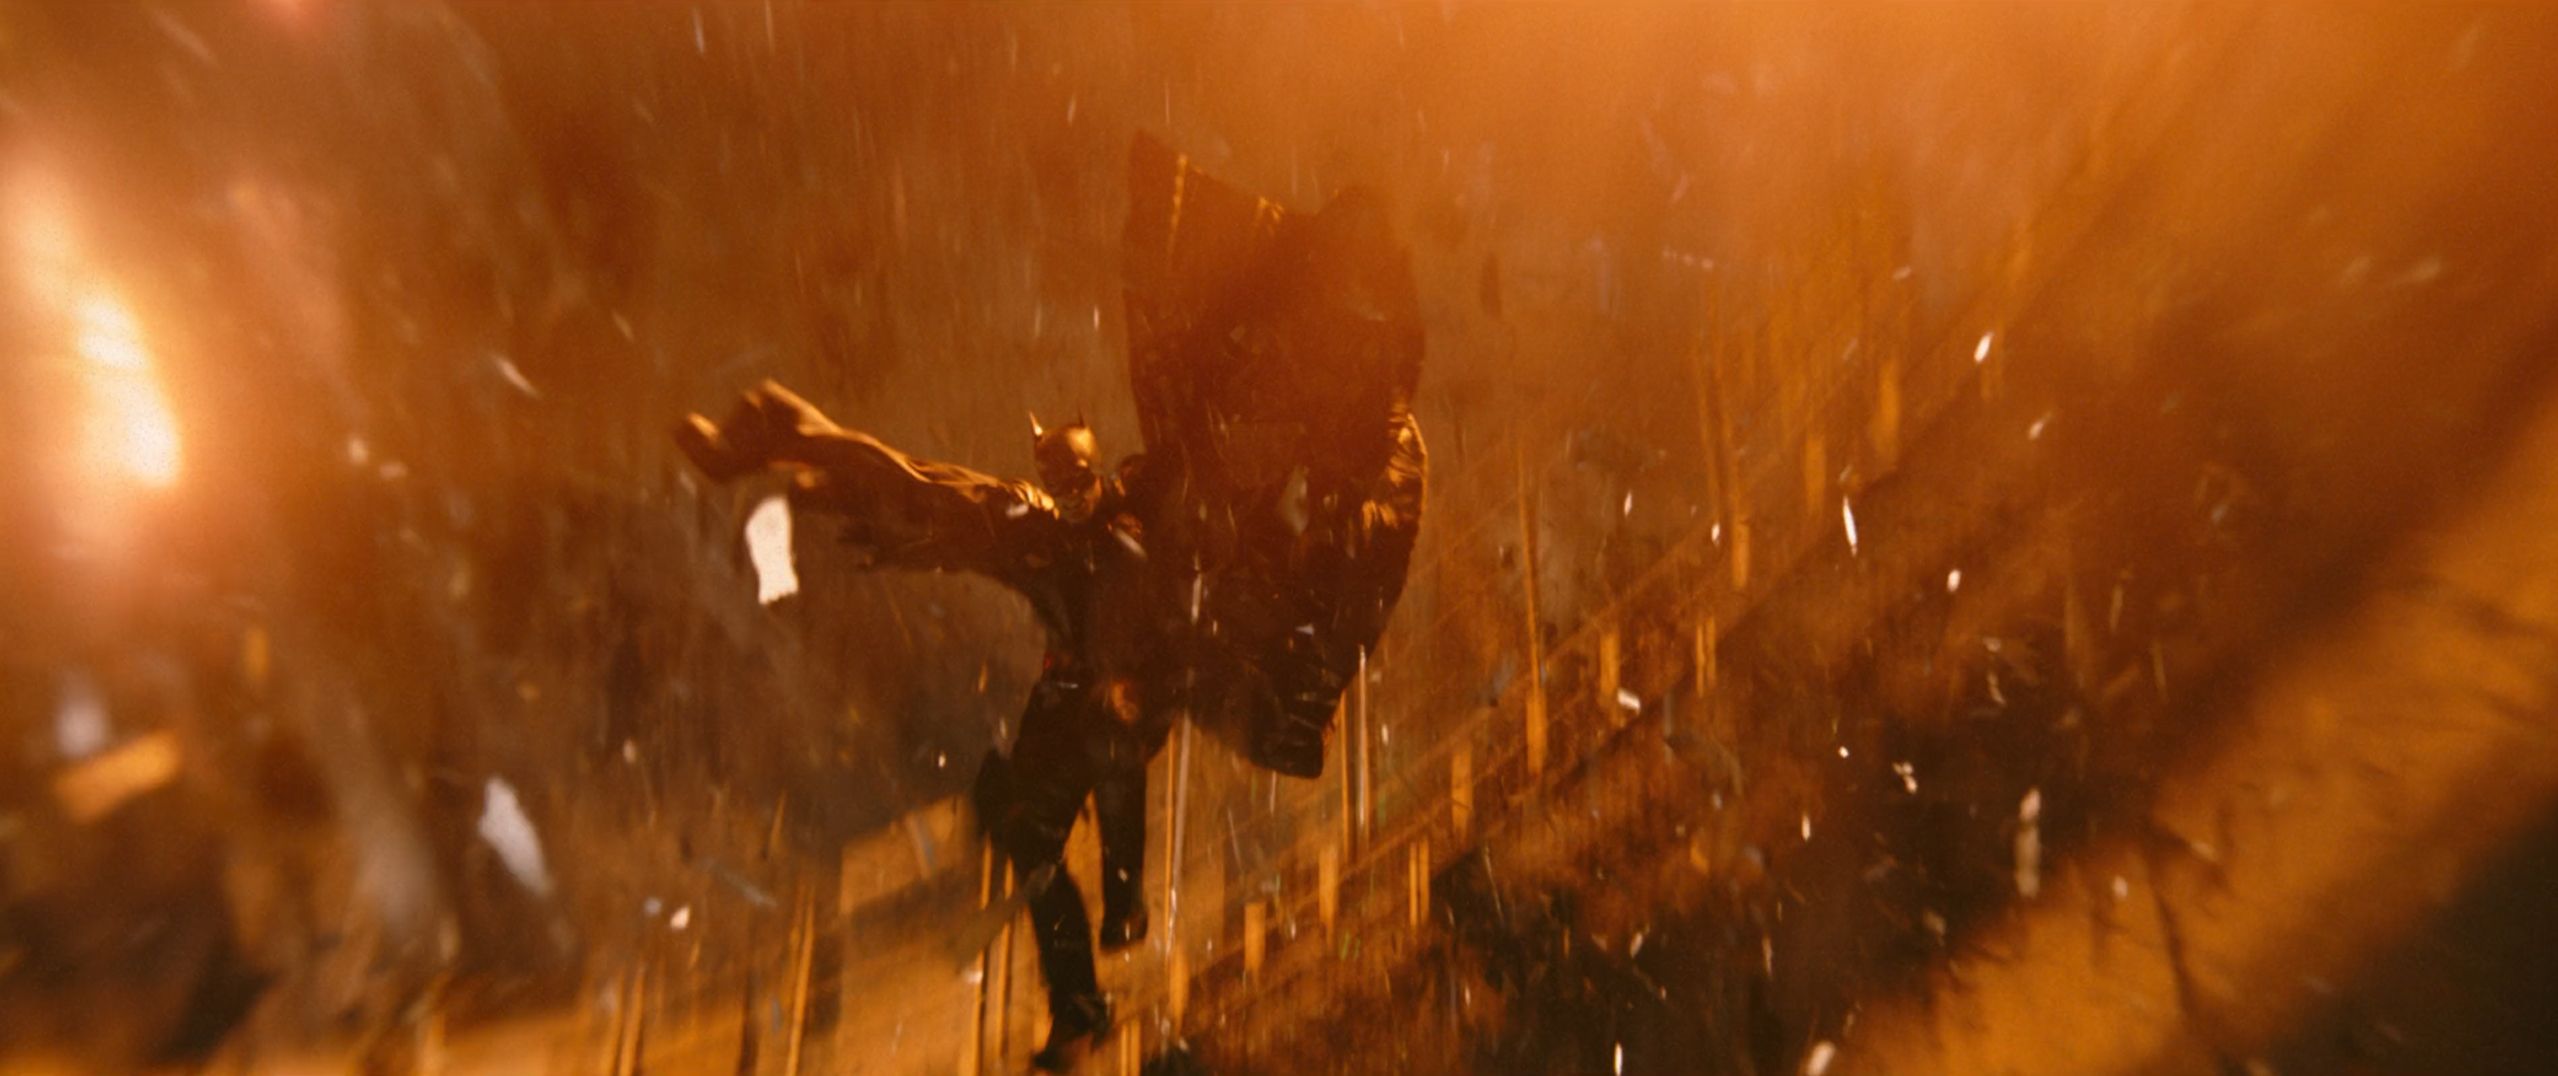 the batman movie image (1)